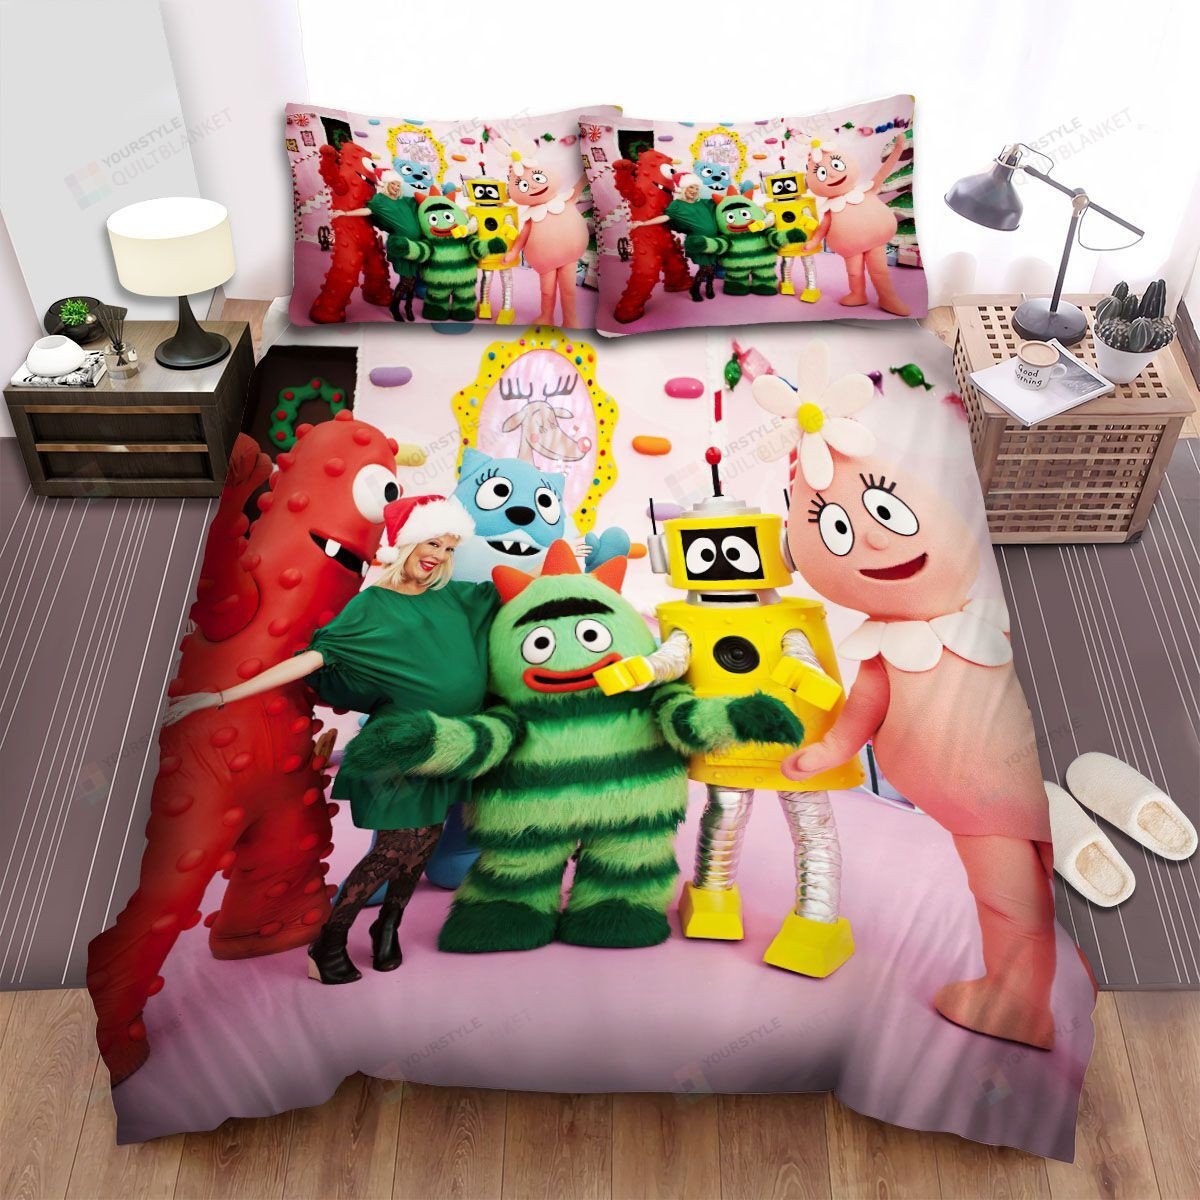 Yo Gabba Gabba! Reality Show Bed Sheets Spread Duvet Cover Bedding Sets